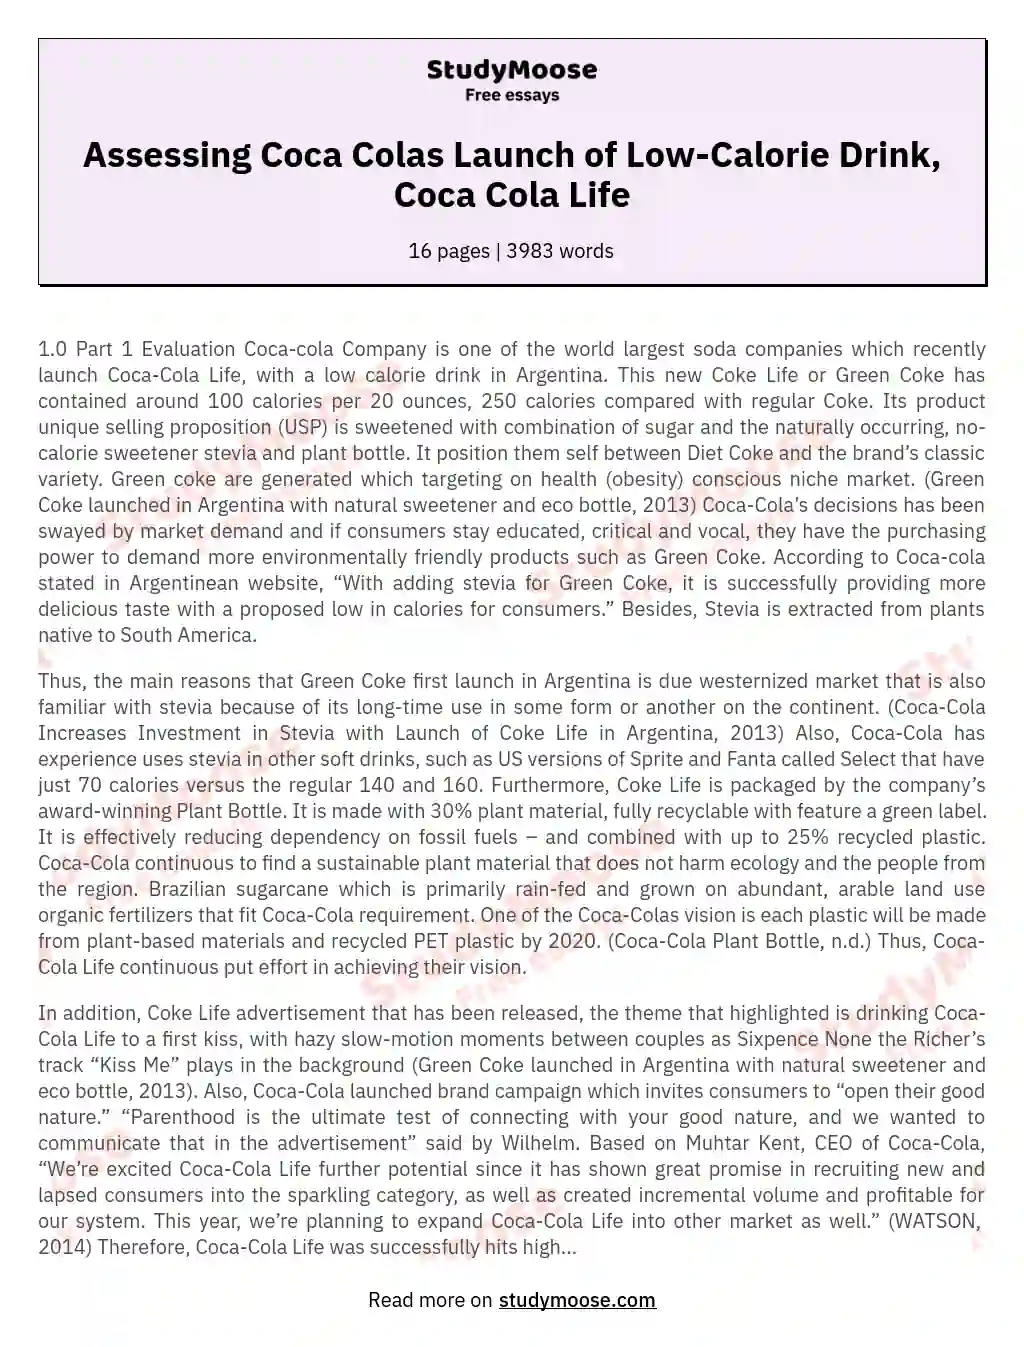 Assessing Coca Colas Launch of Low-Calorie Drink, Coca Cola Life essay